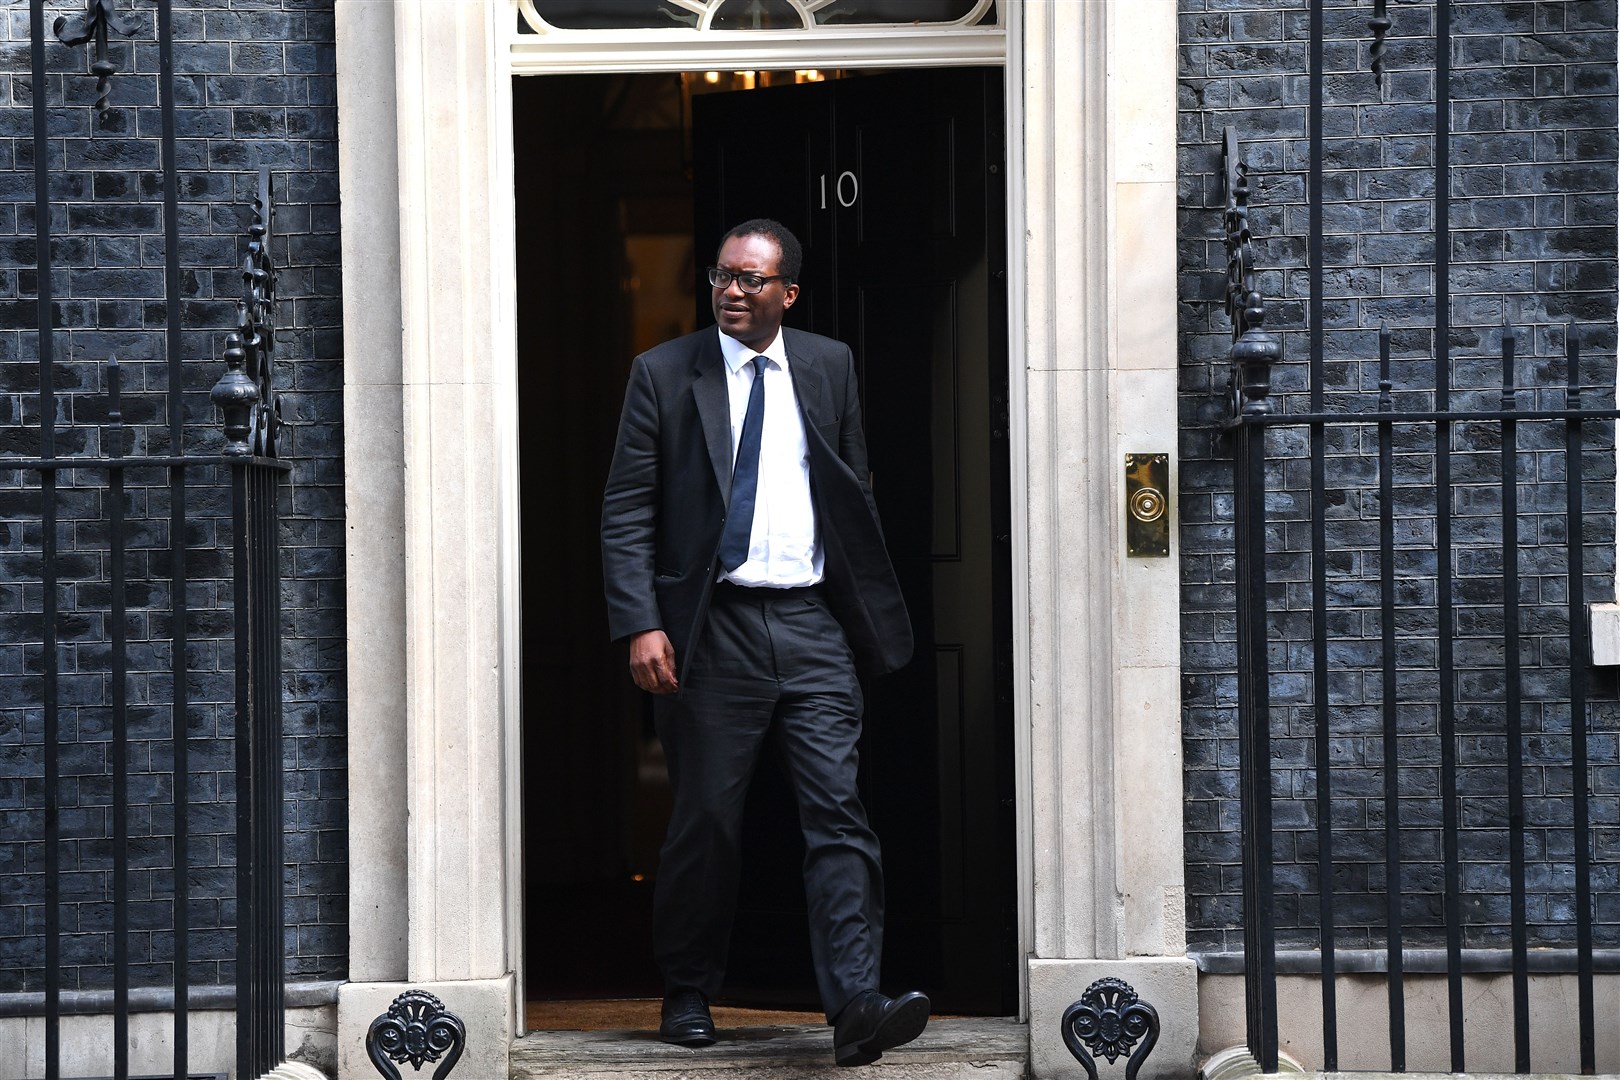 Business Secretary Kwasi Kwarteng leaves following a cabinet meeting at 10 Downing Street, London (Victoria Jones/PA)